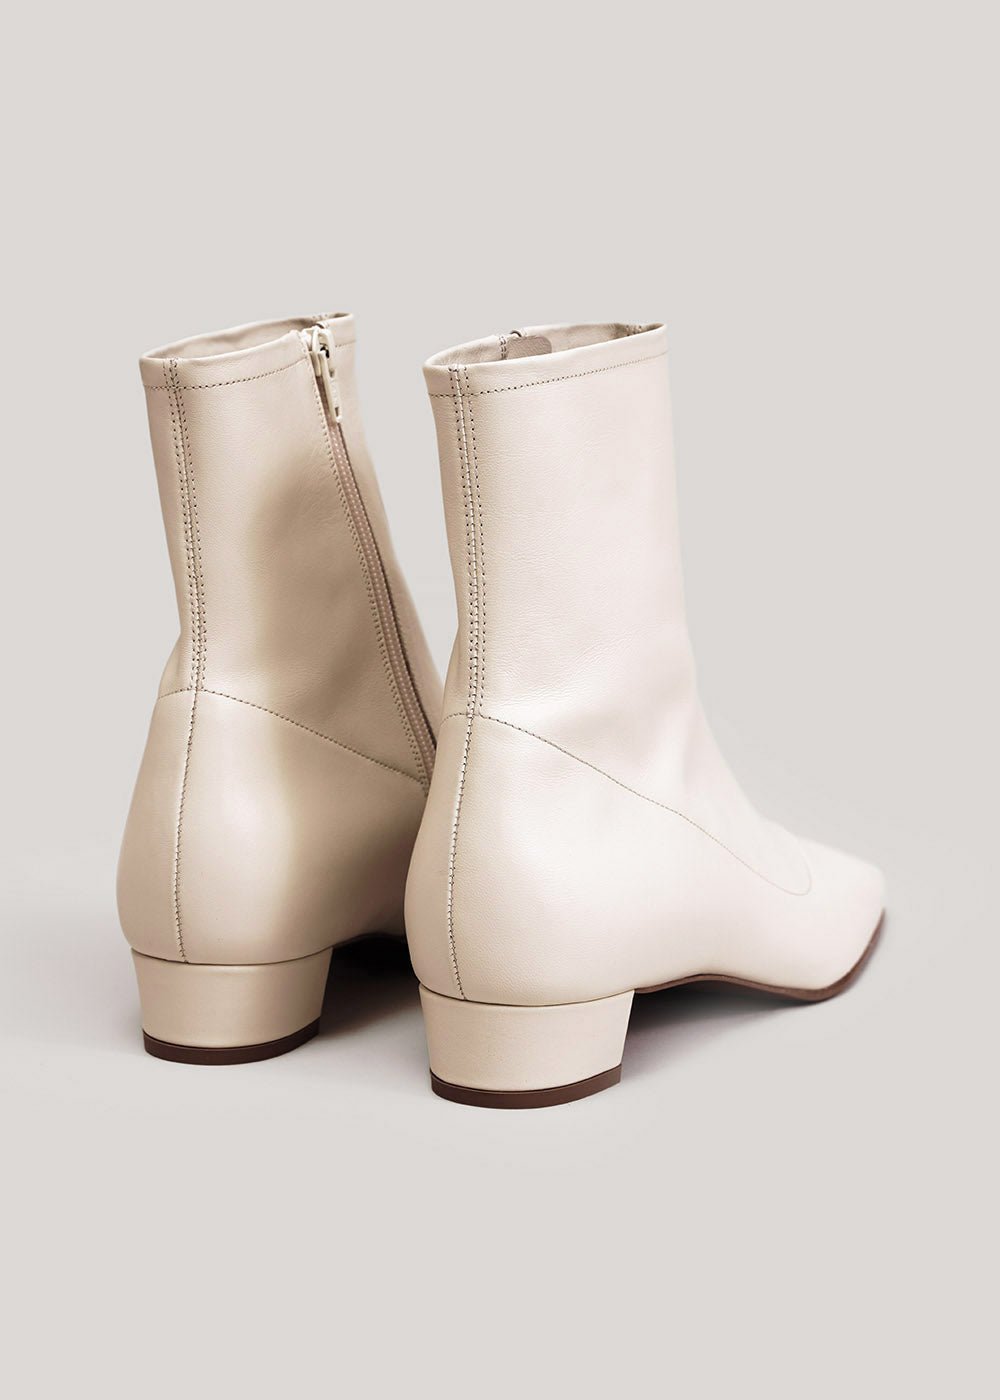 Women's White Boots: Shop Online & Save